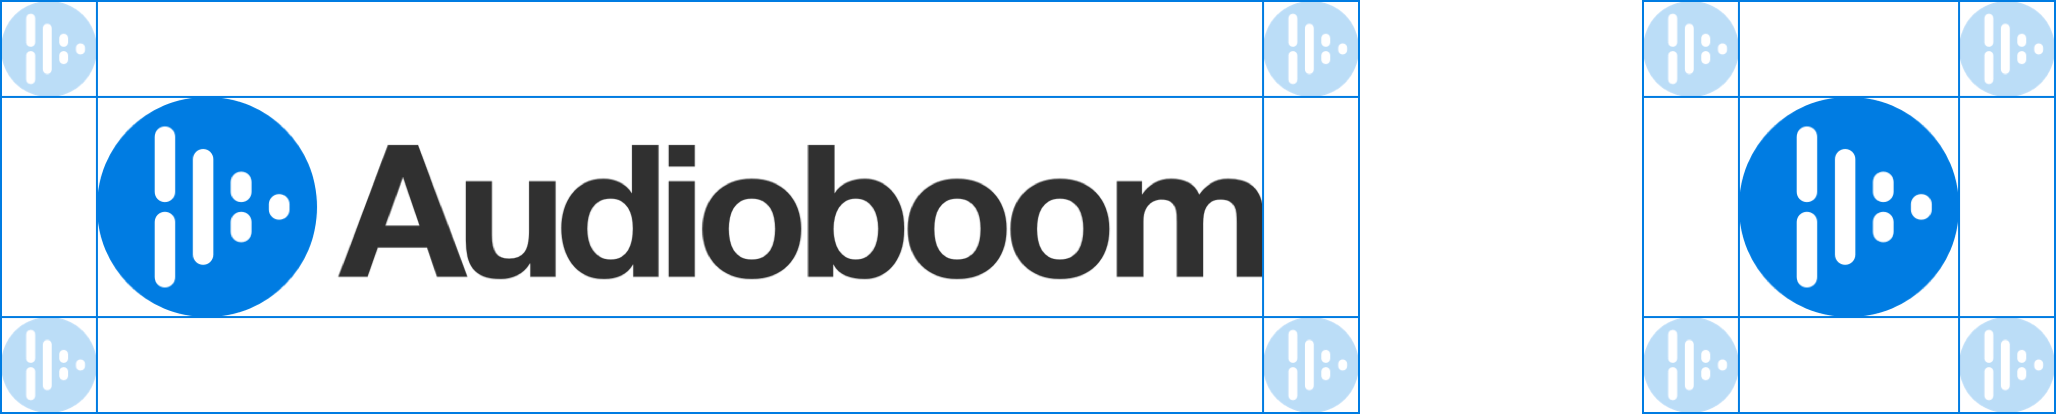 audioboom logo usage guidelines